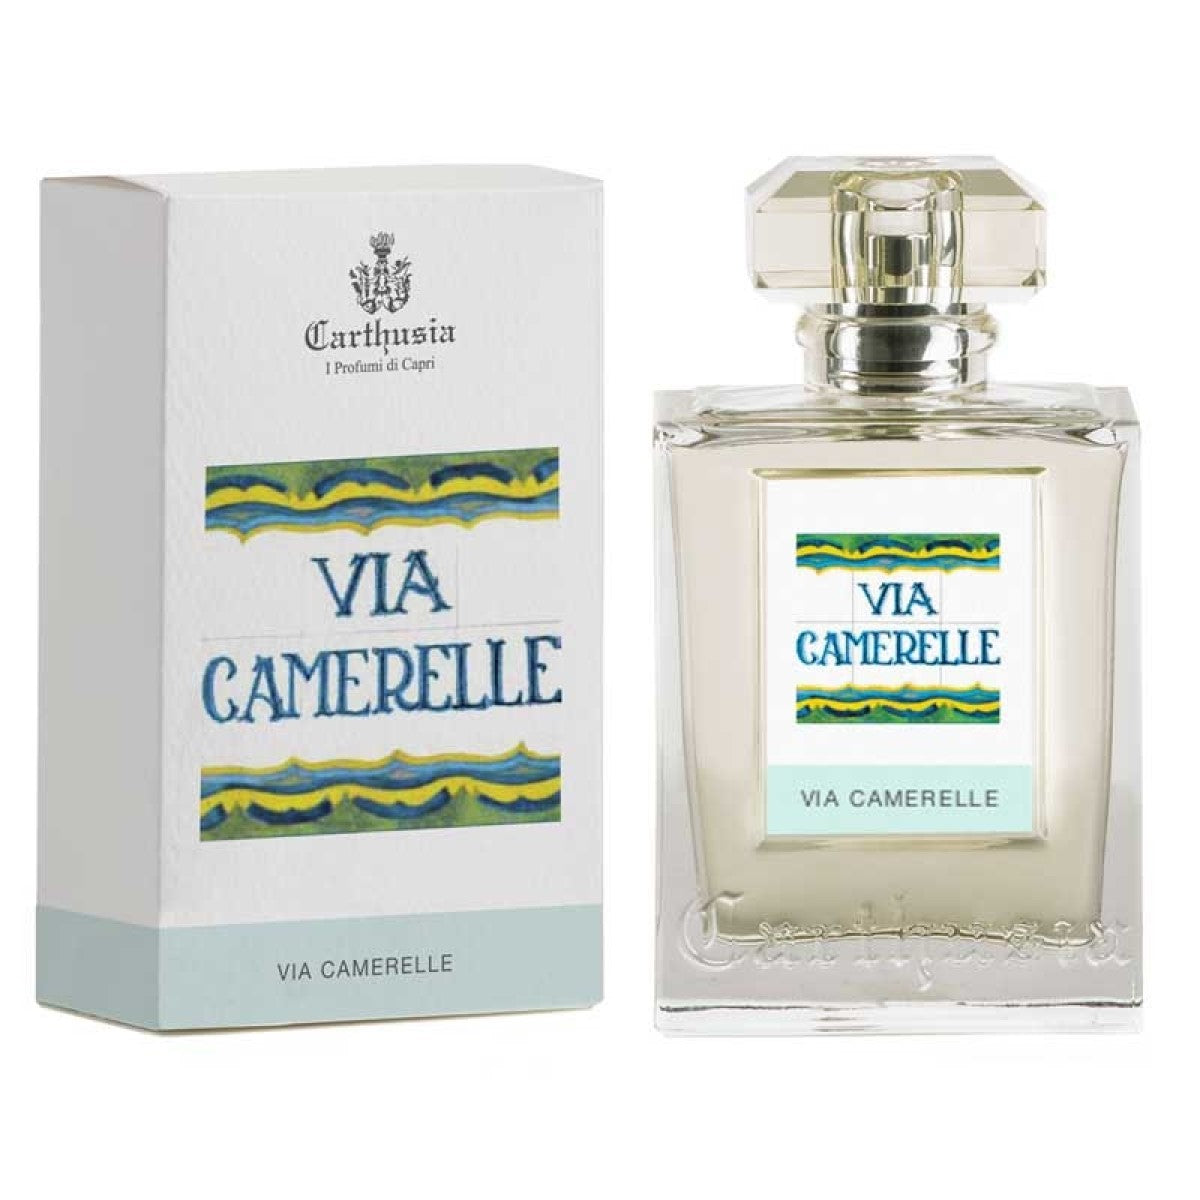 Primary image of Via Camerelle Eau de Parfum